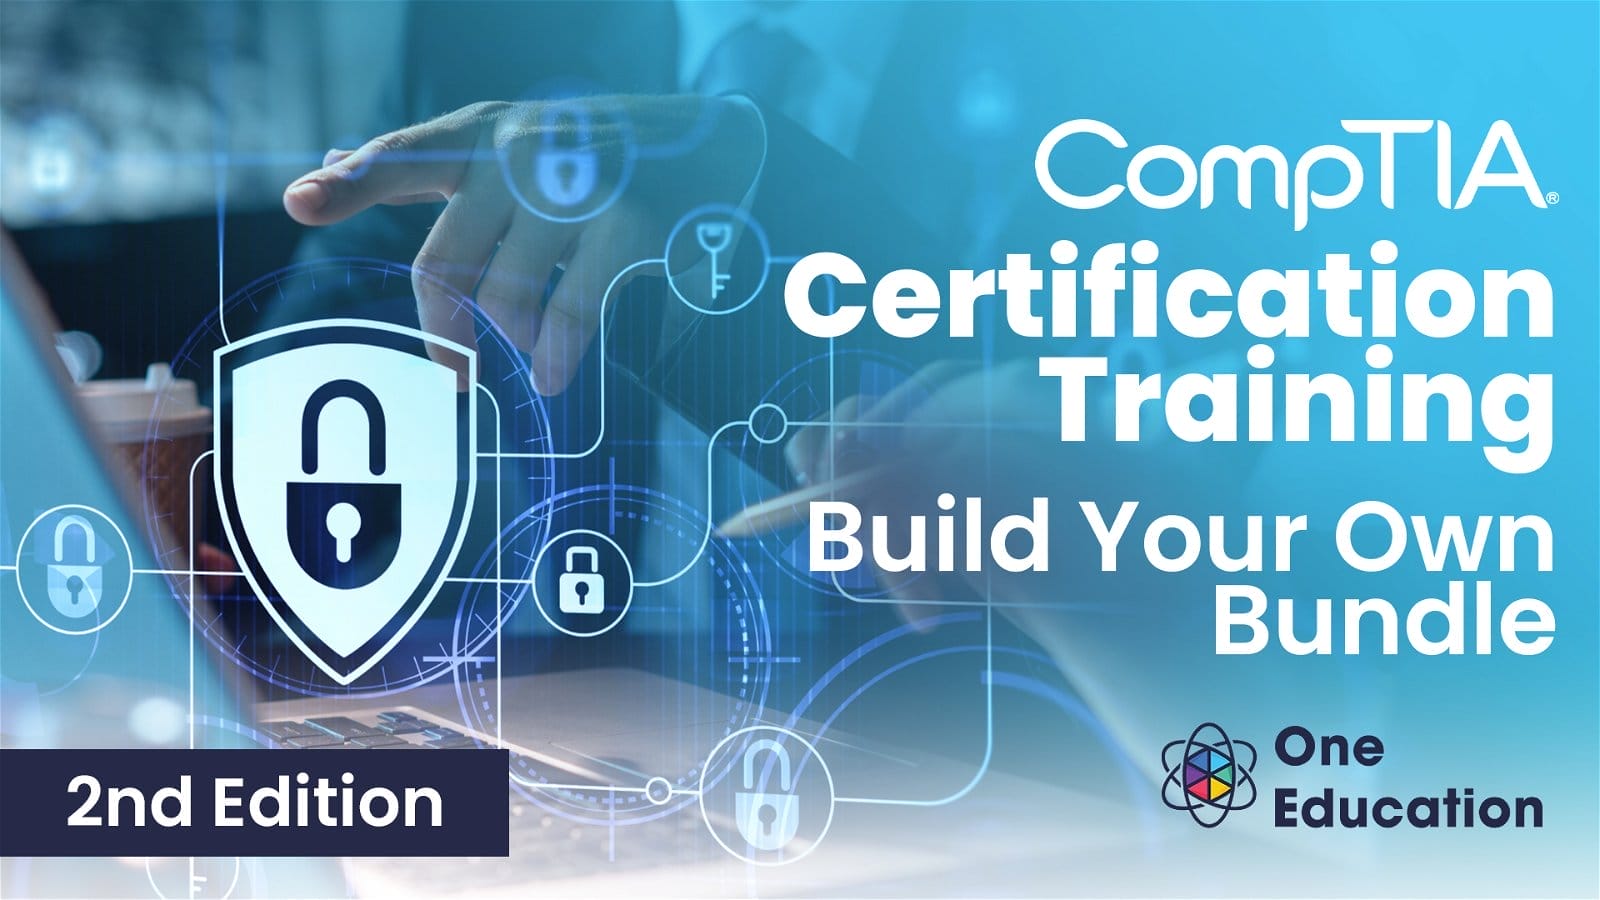 CompTIA Certification Training - Build Your Own Bundle